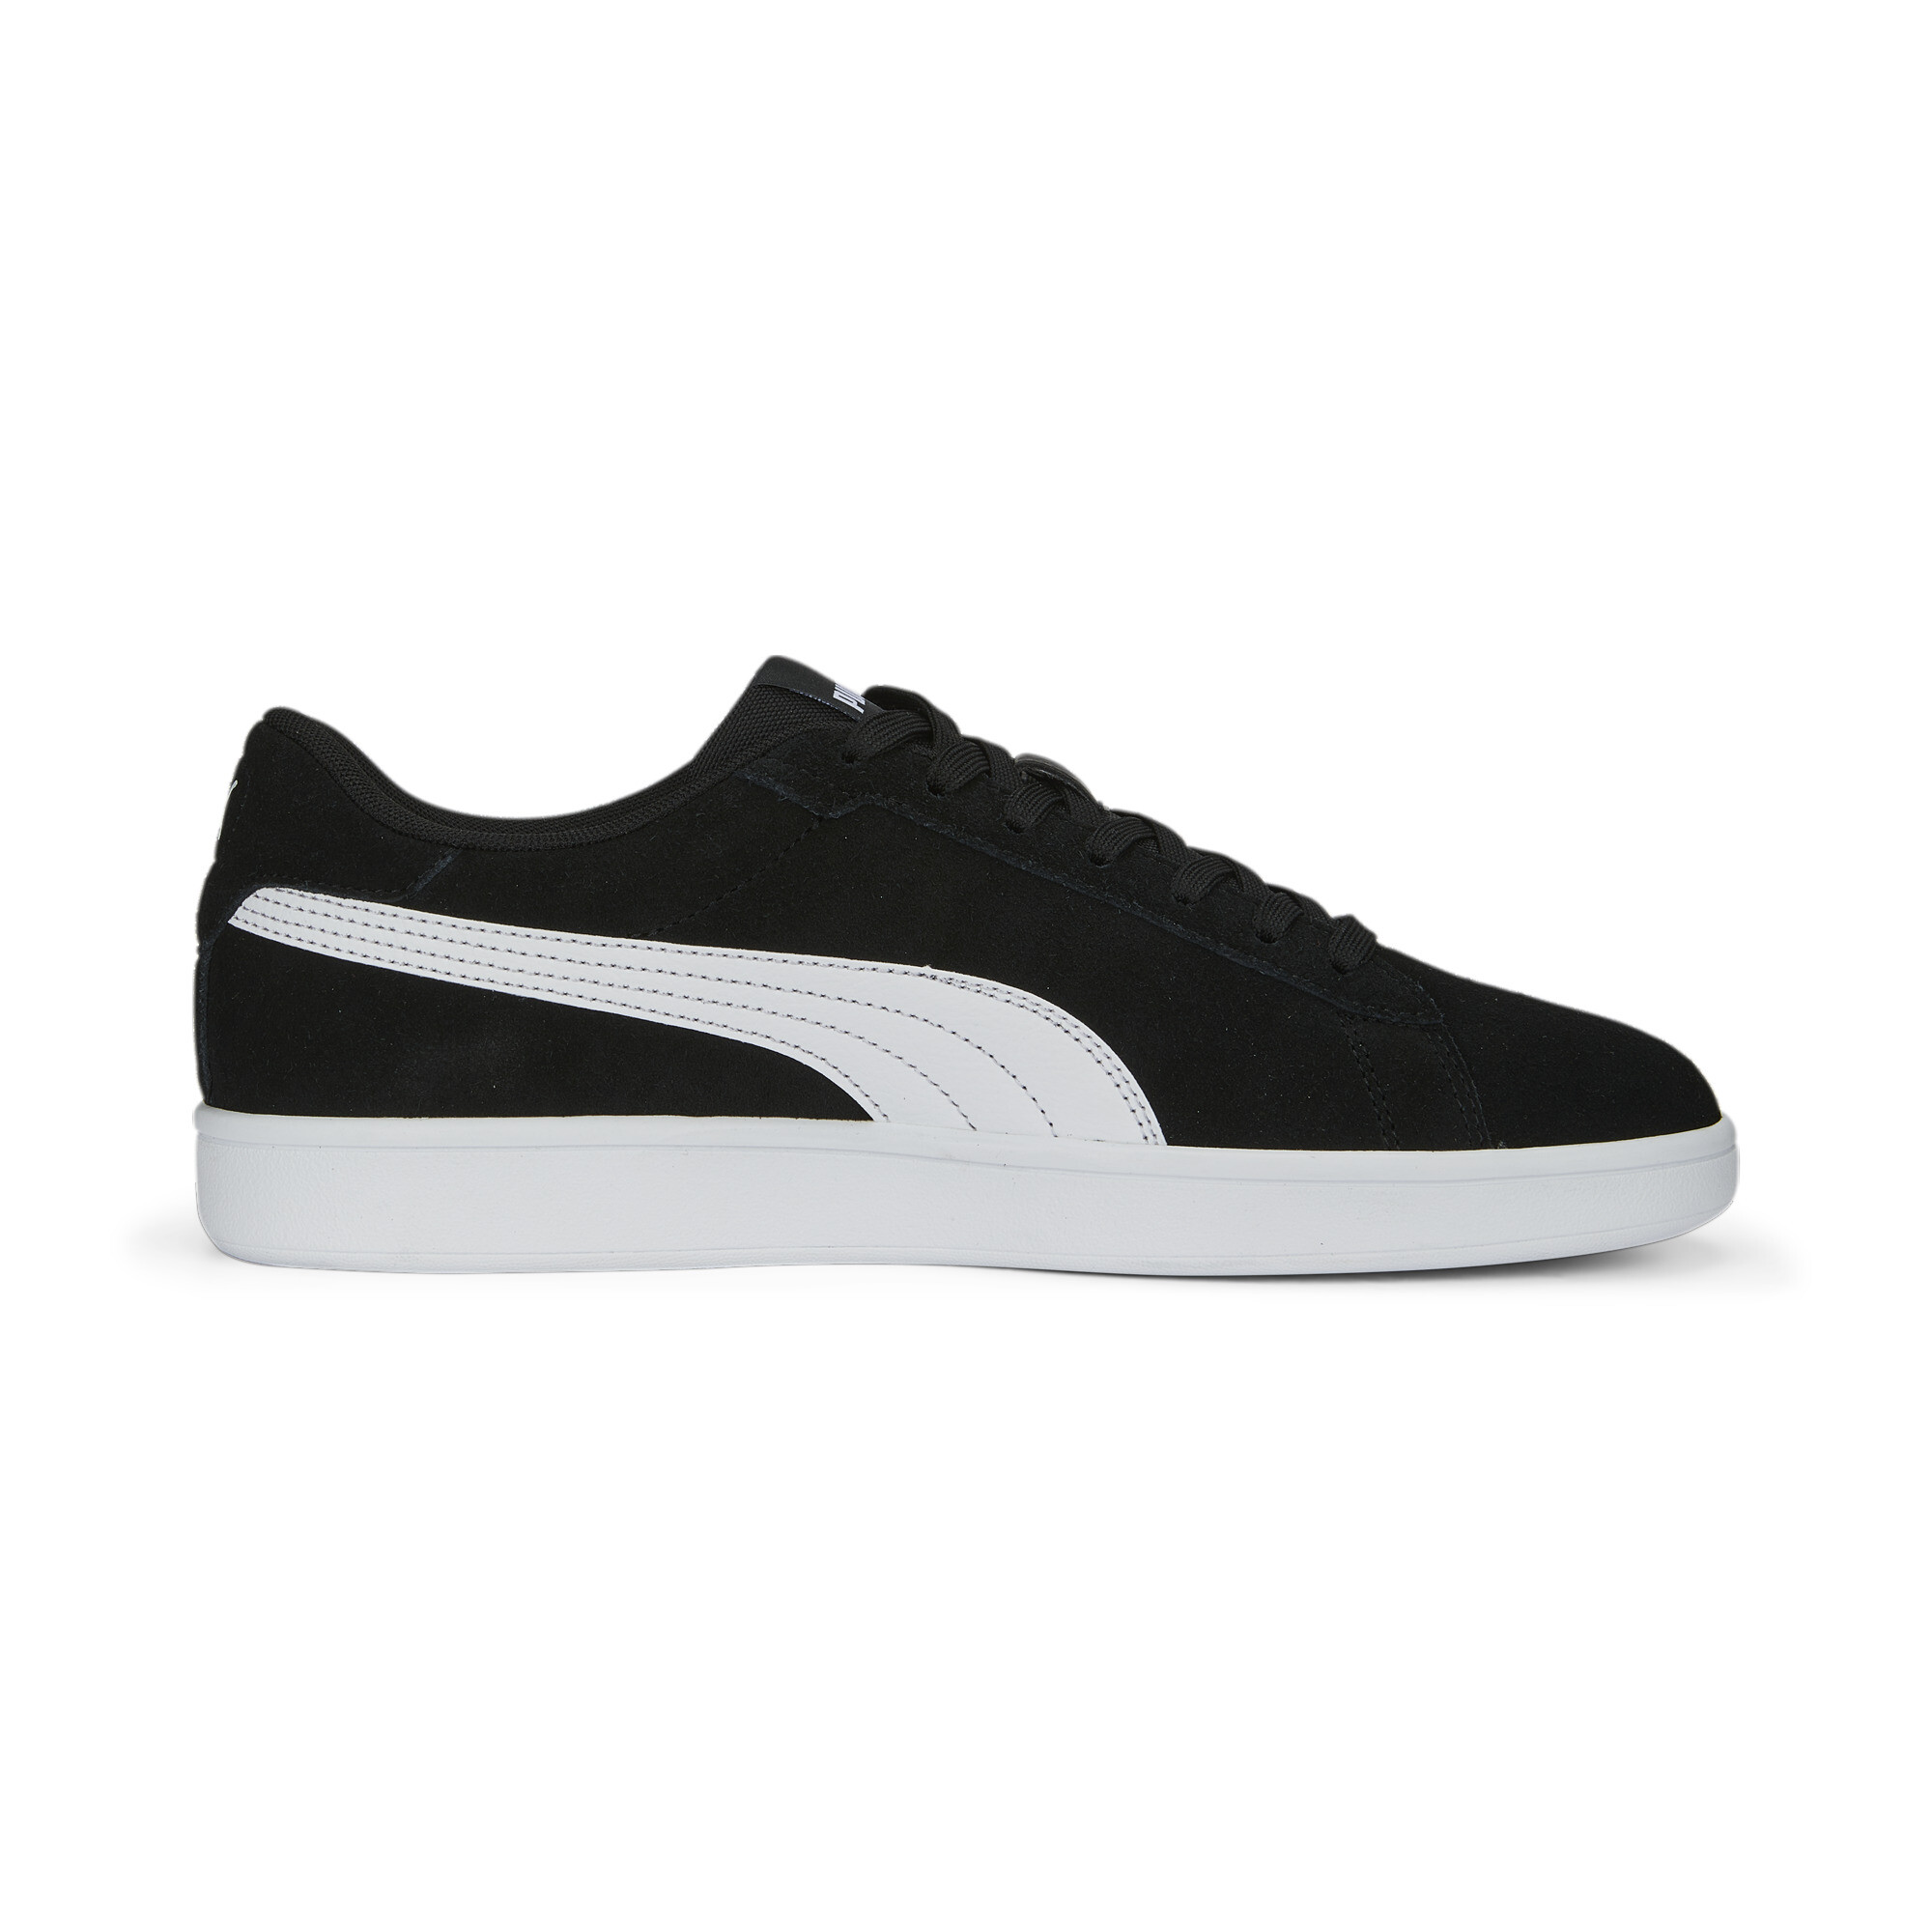 Puma Smash 3.0 Sneakers, Black, Size 38.5, Shoes